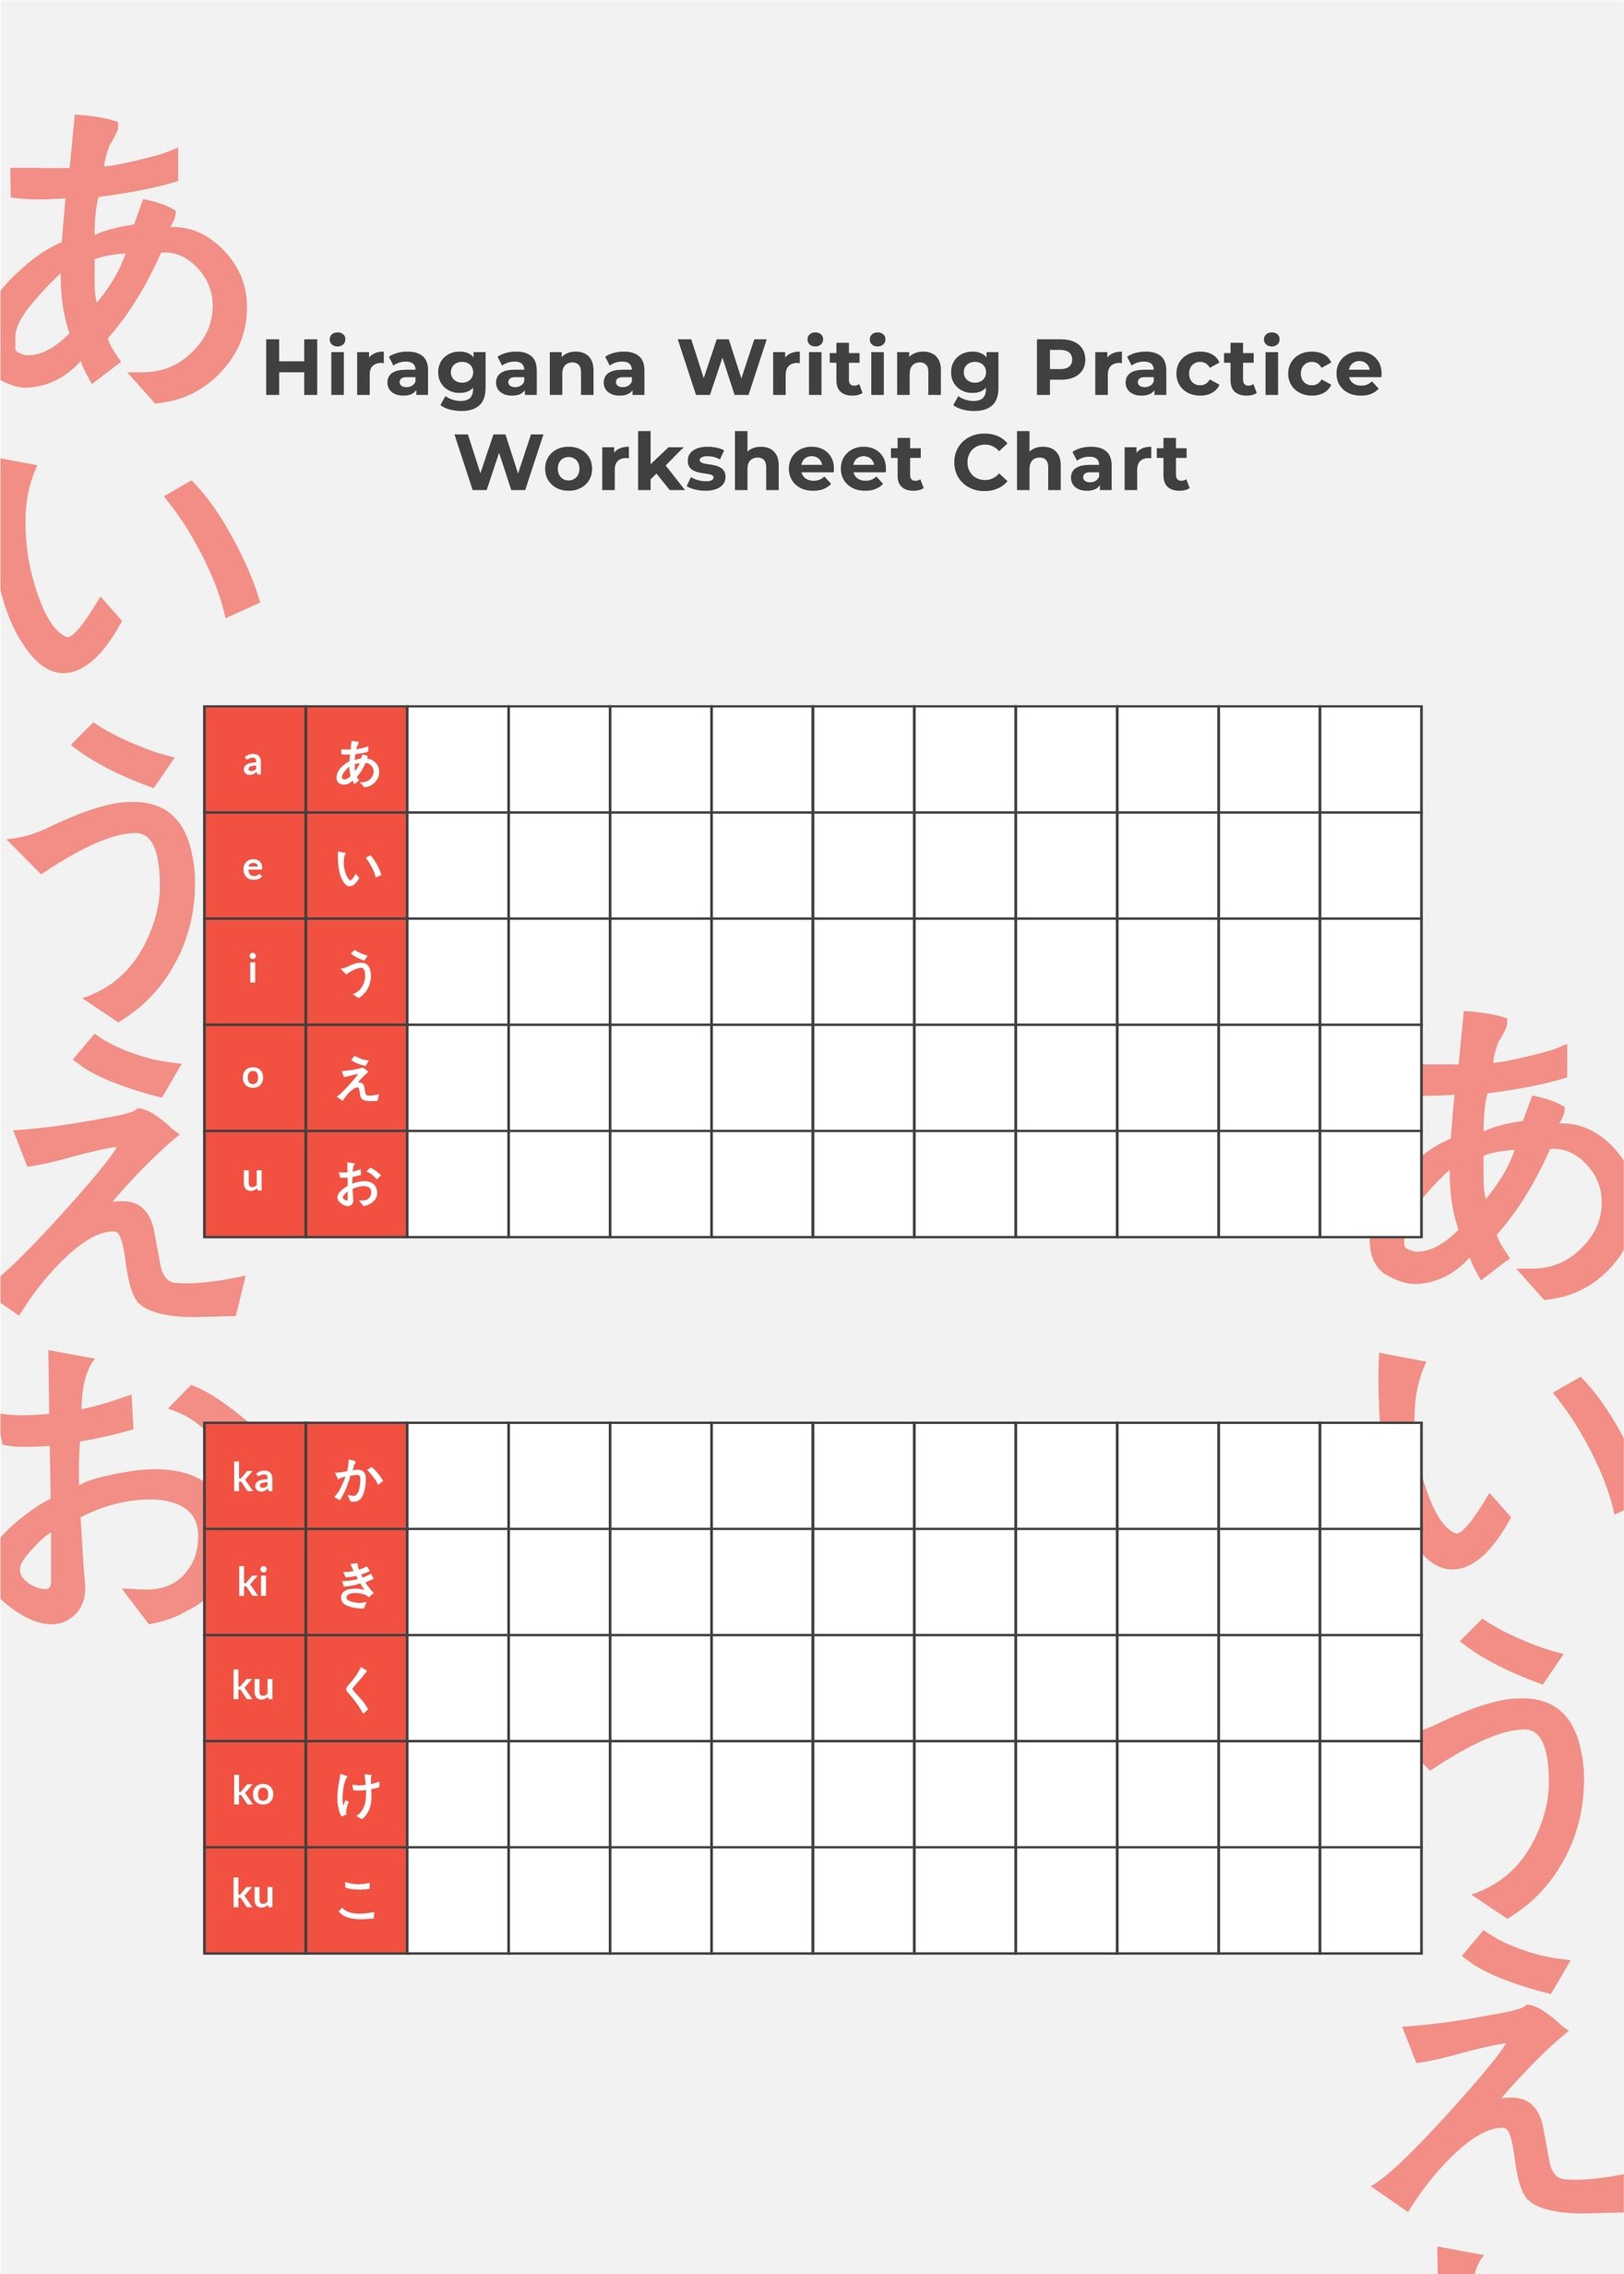 Hiragana Writing Practice Worksheet Chart in PDF, Illustrator